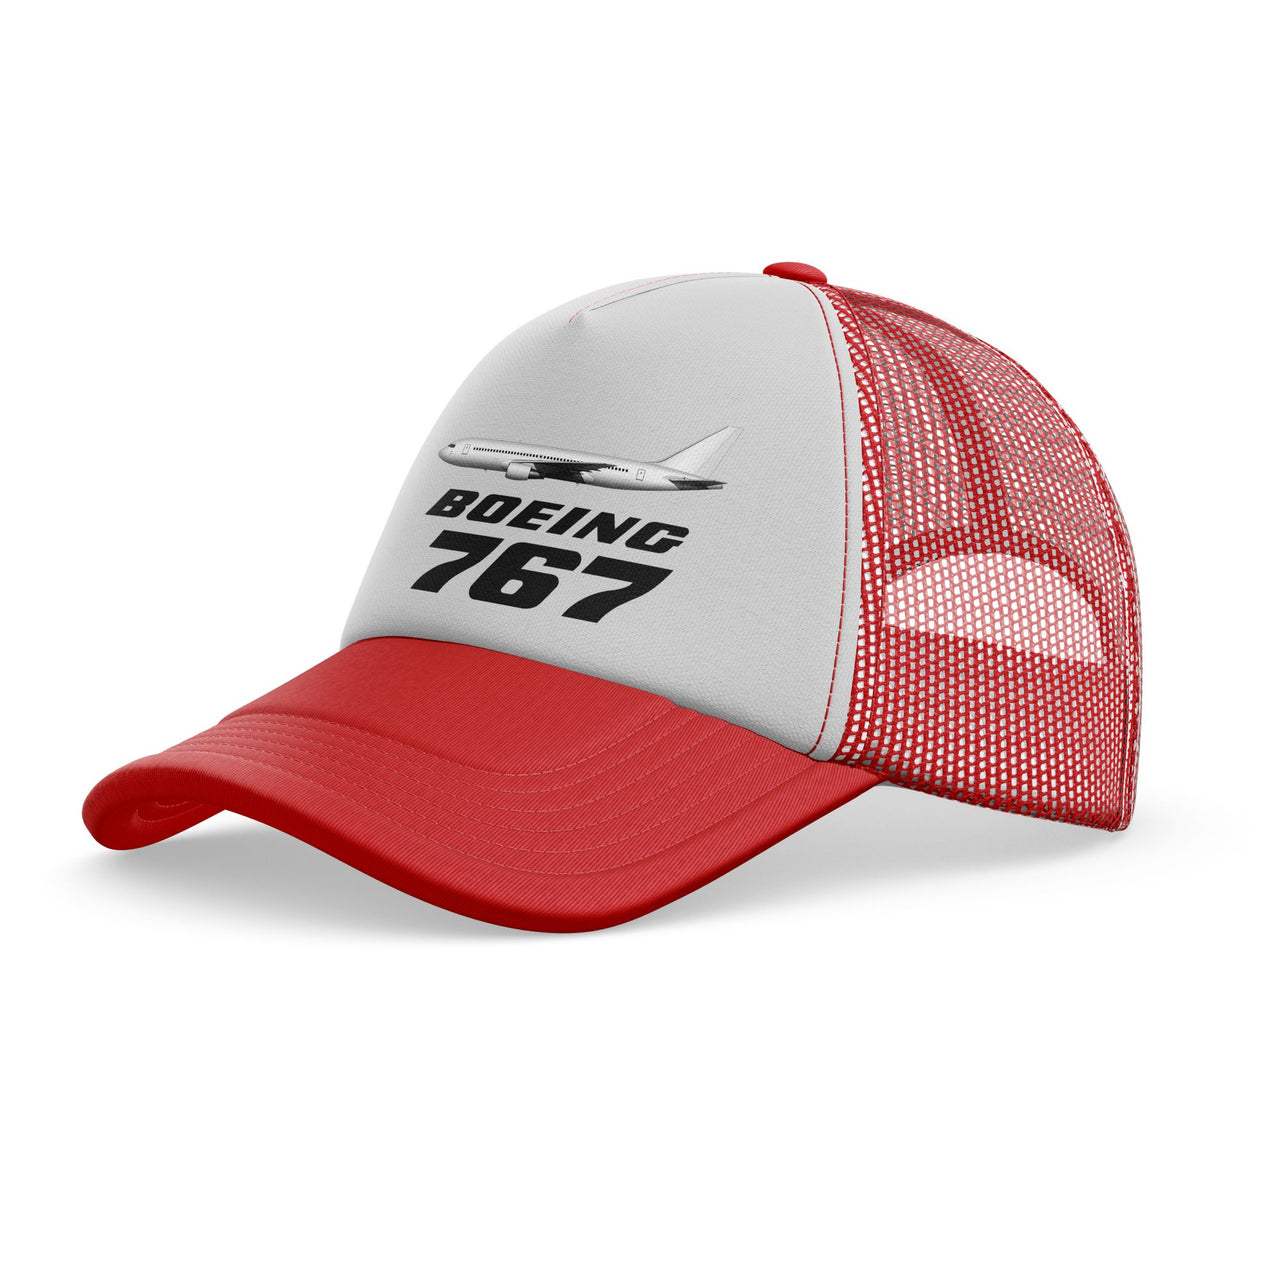 The Boeing 767 Designed Trucker Caps & Hats